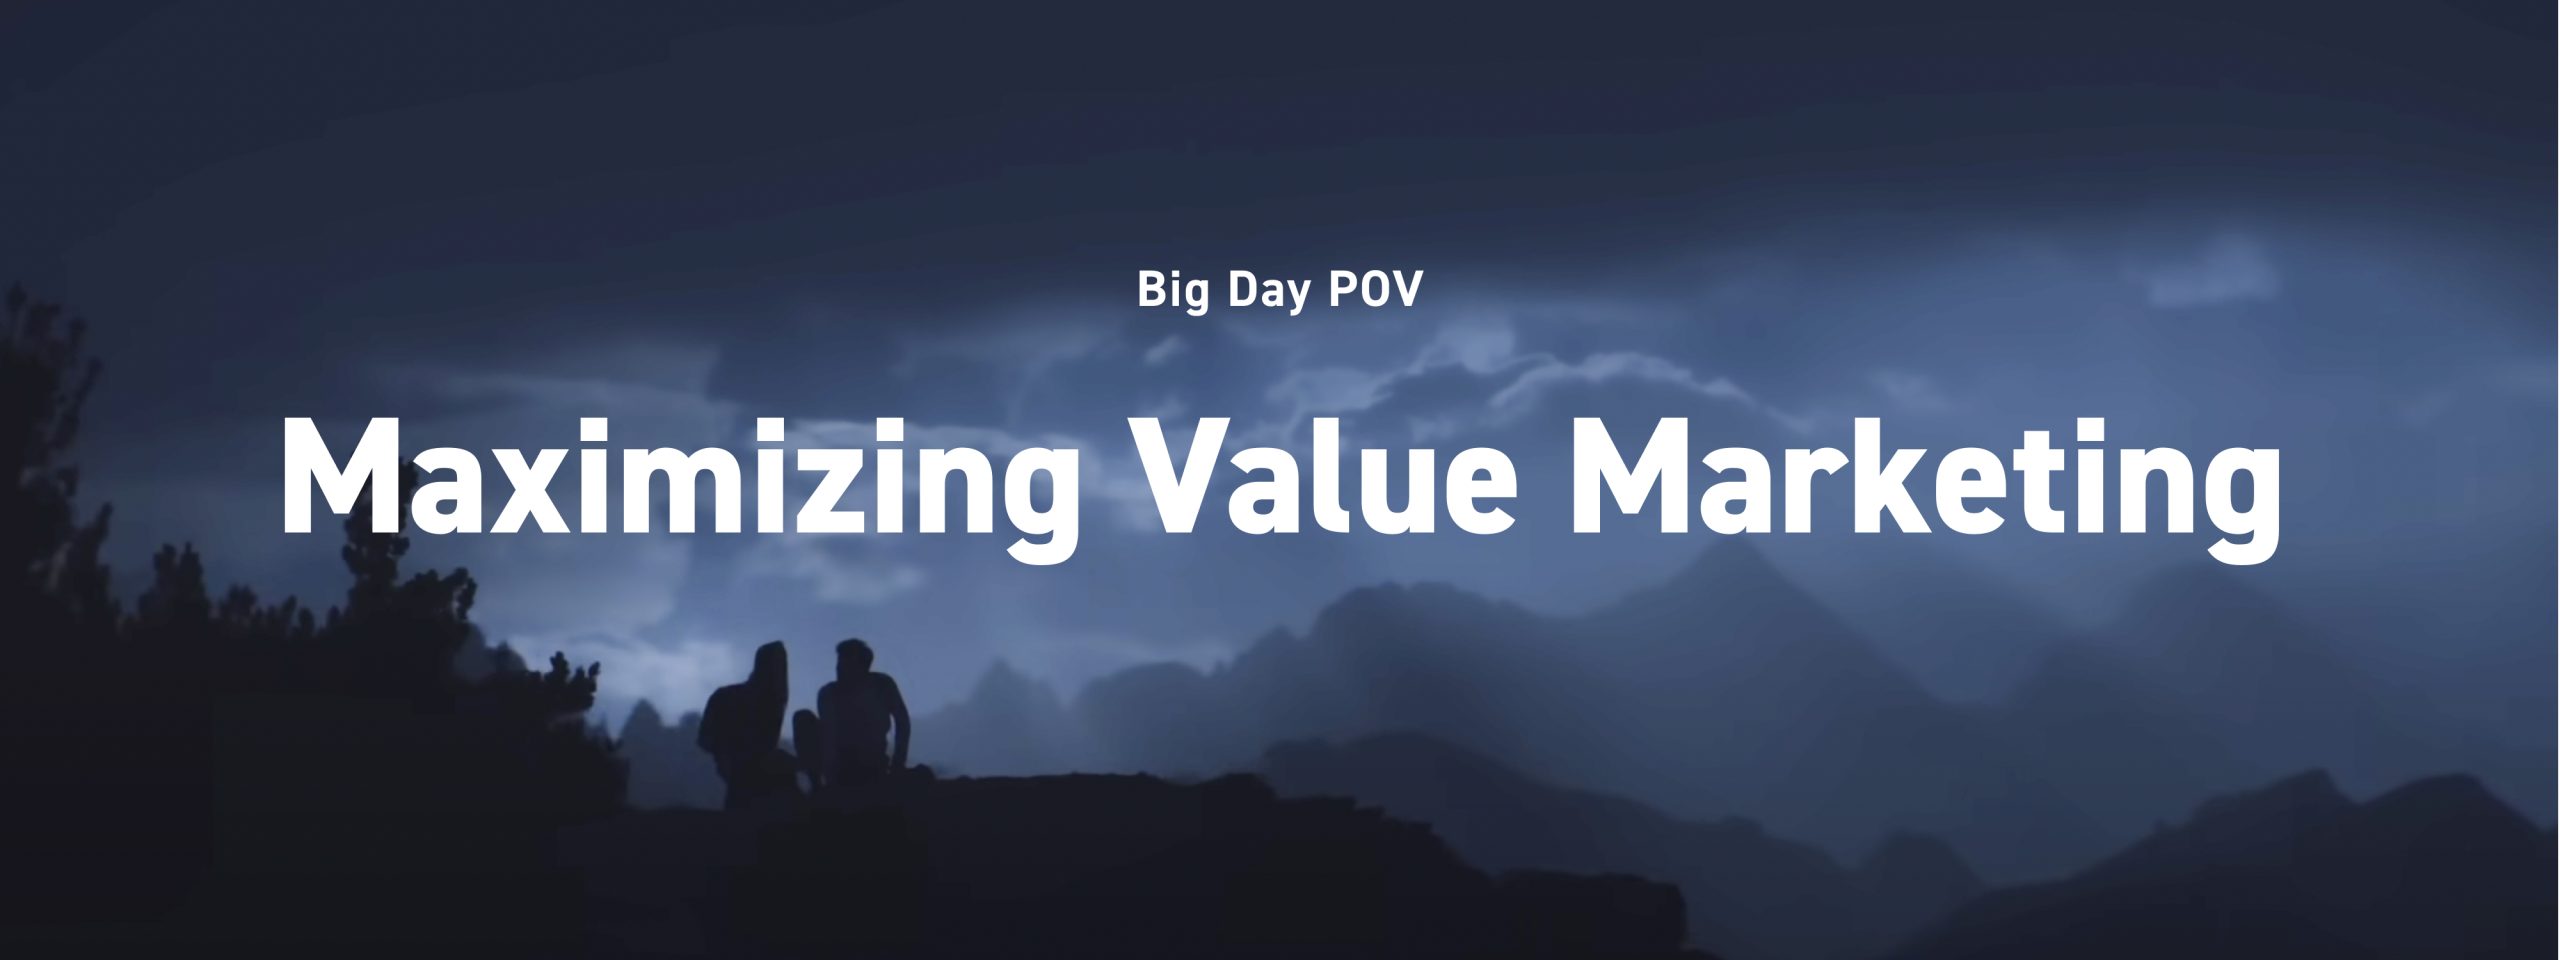 Maximizing Value Marketing In Unprecedented Economic Times